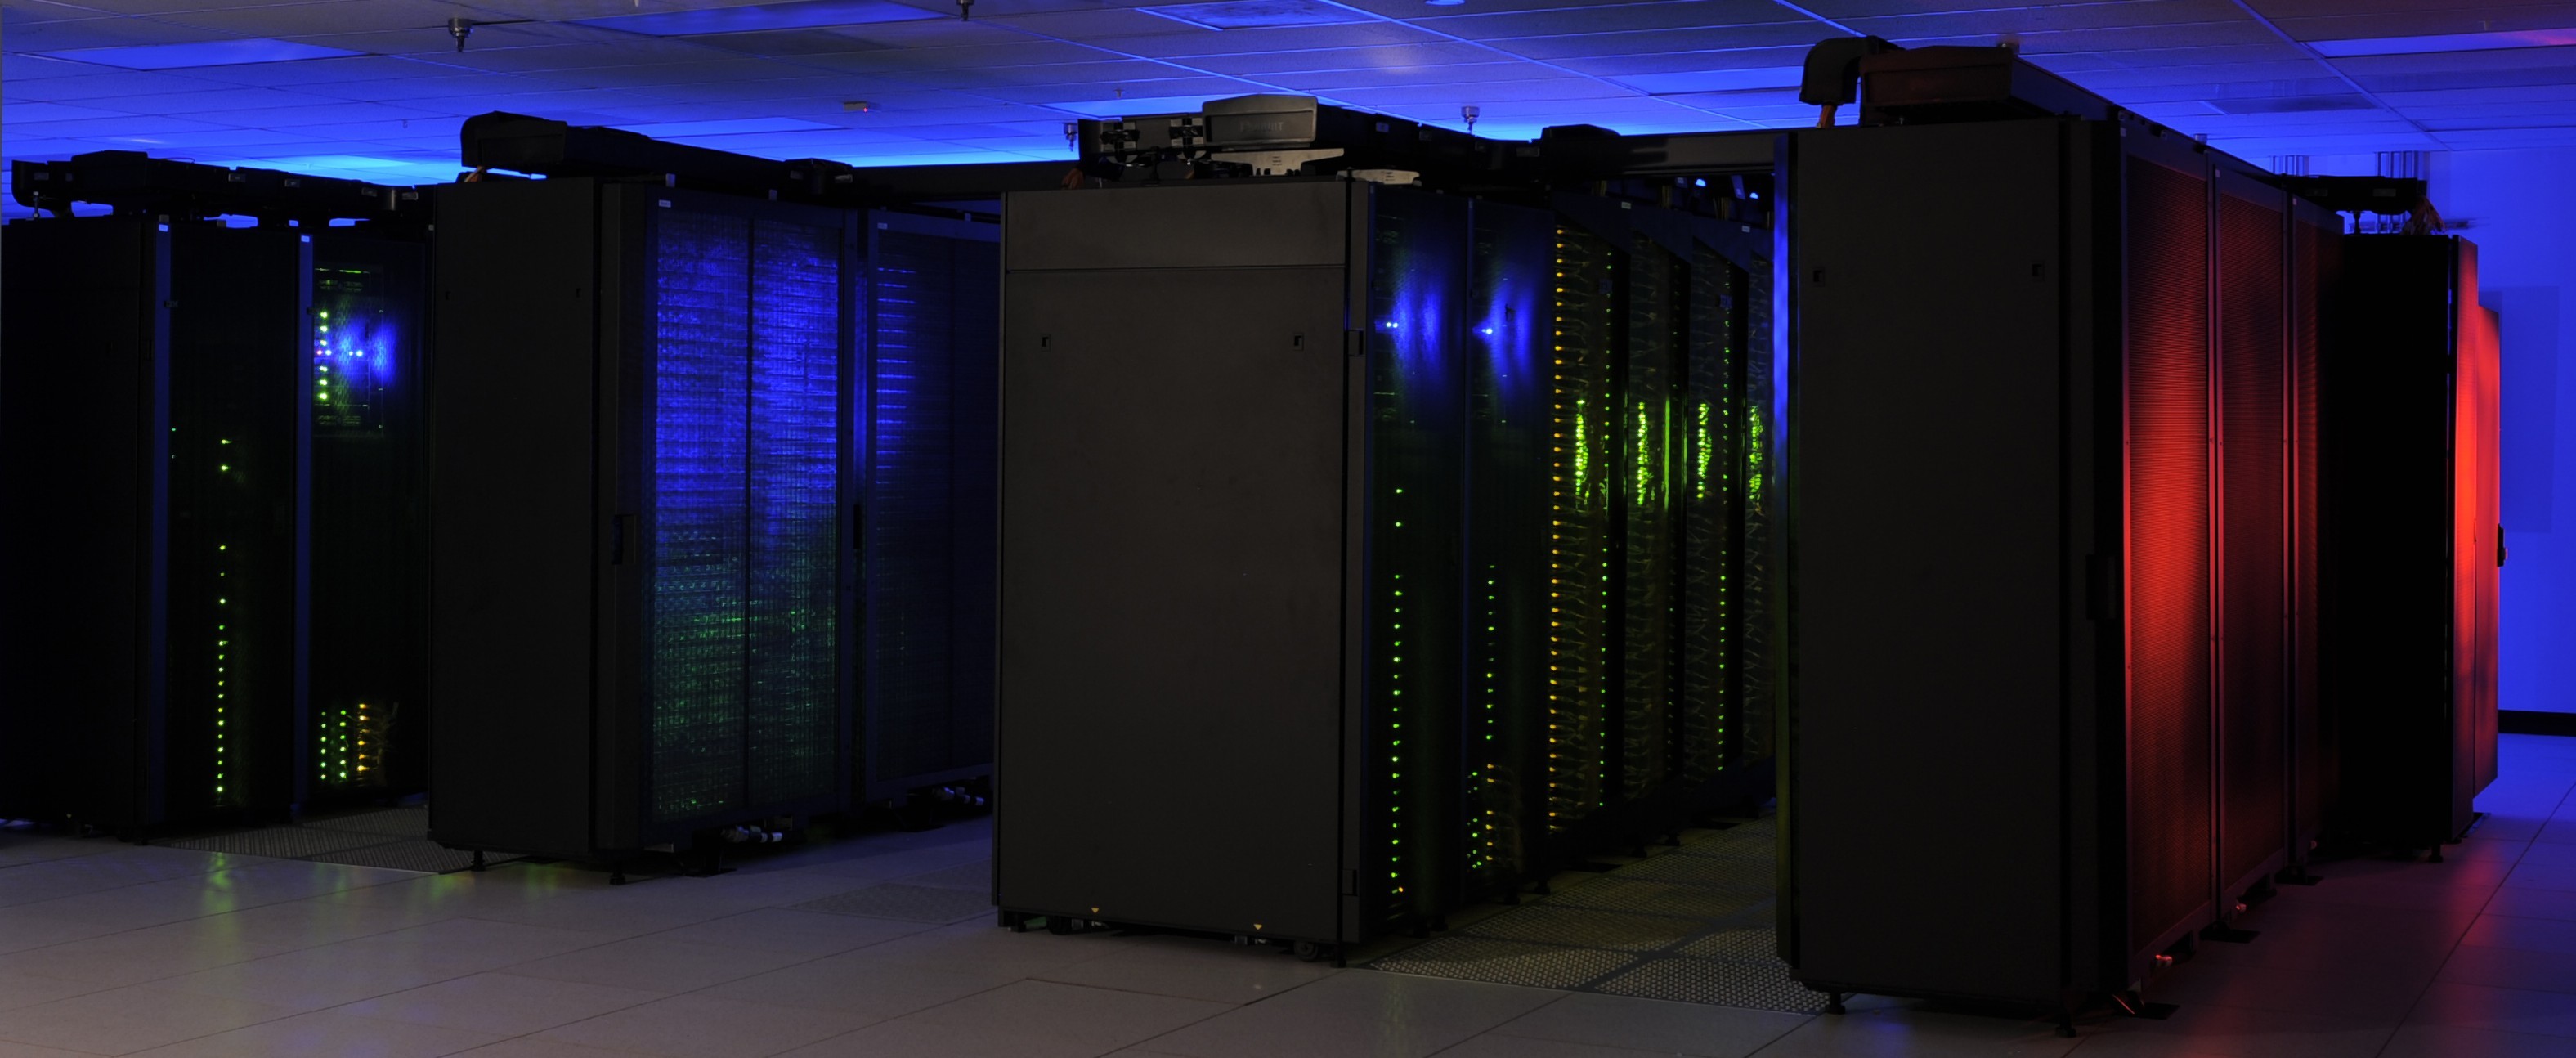 Discover Supercomputer 2 by nasa_goddard on flickr